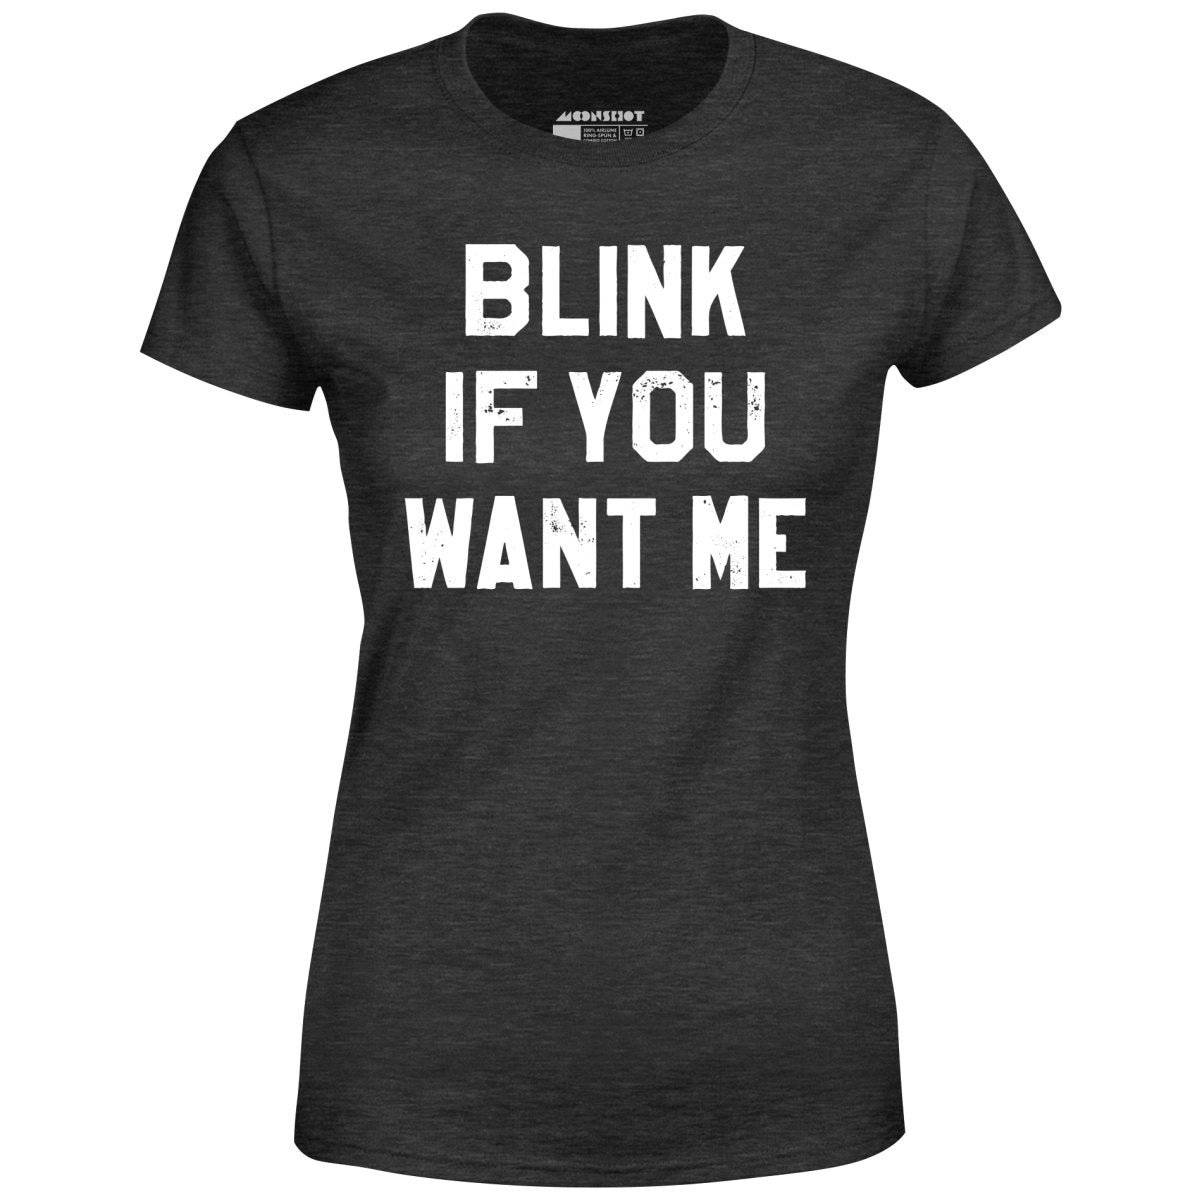 Blink If You Want Me - Women's T-Shirt